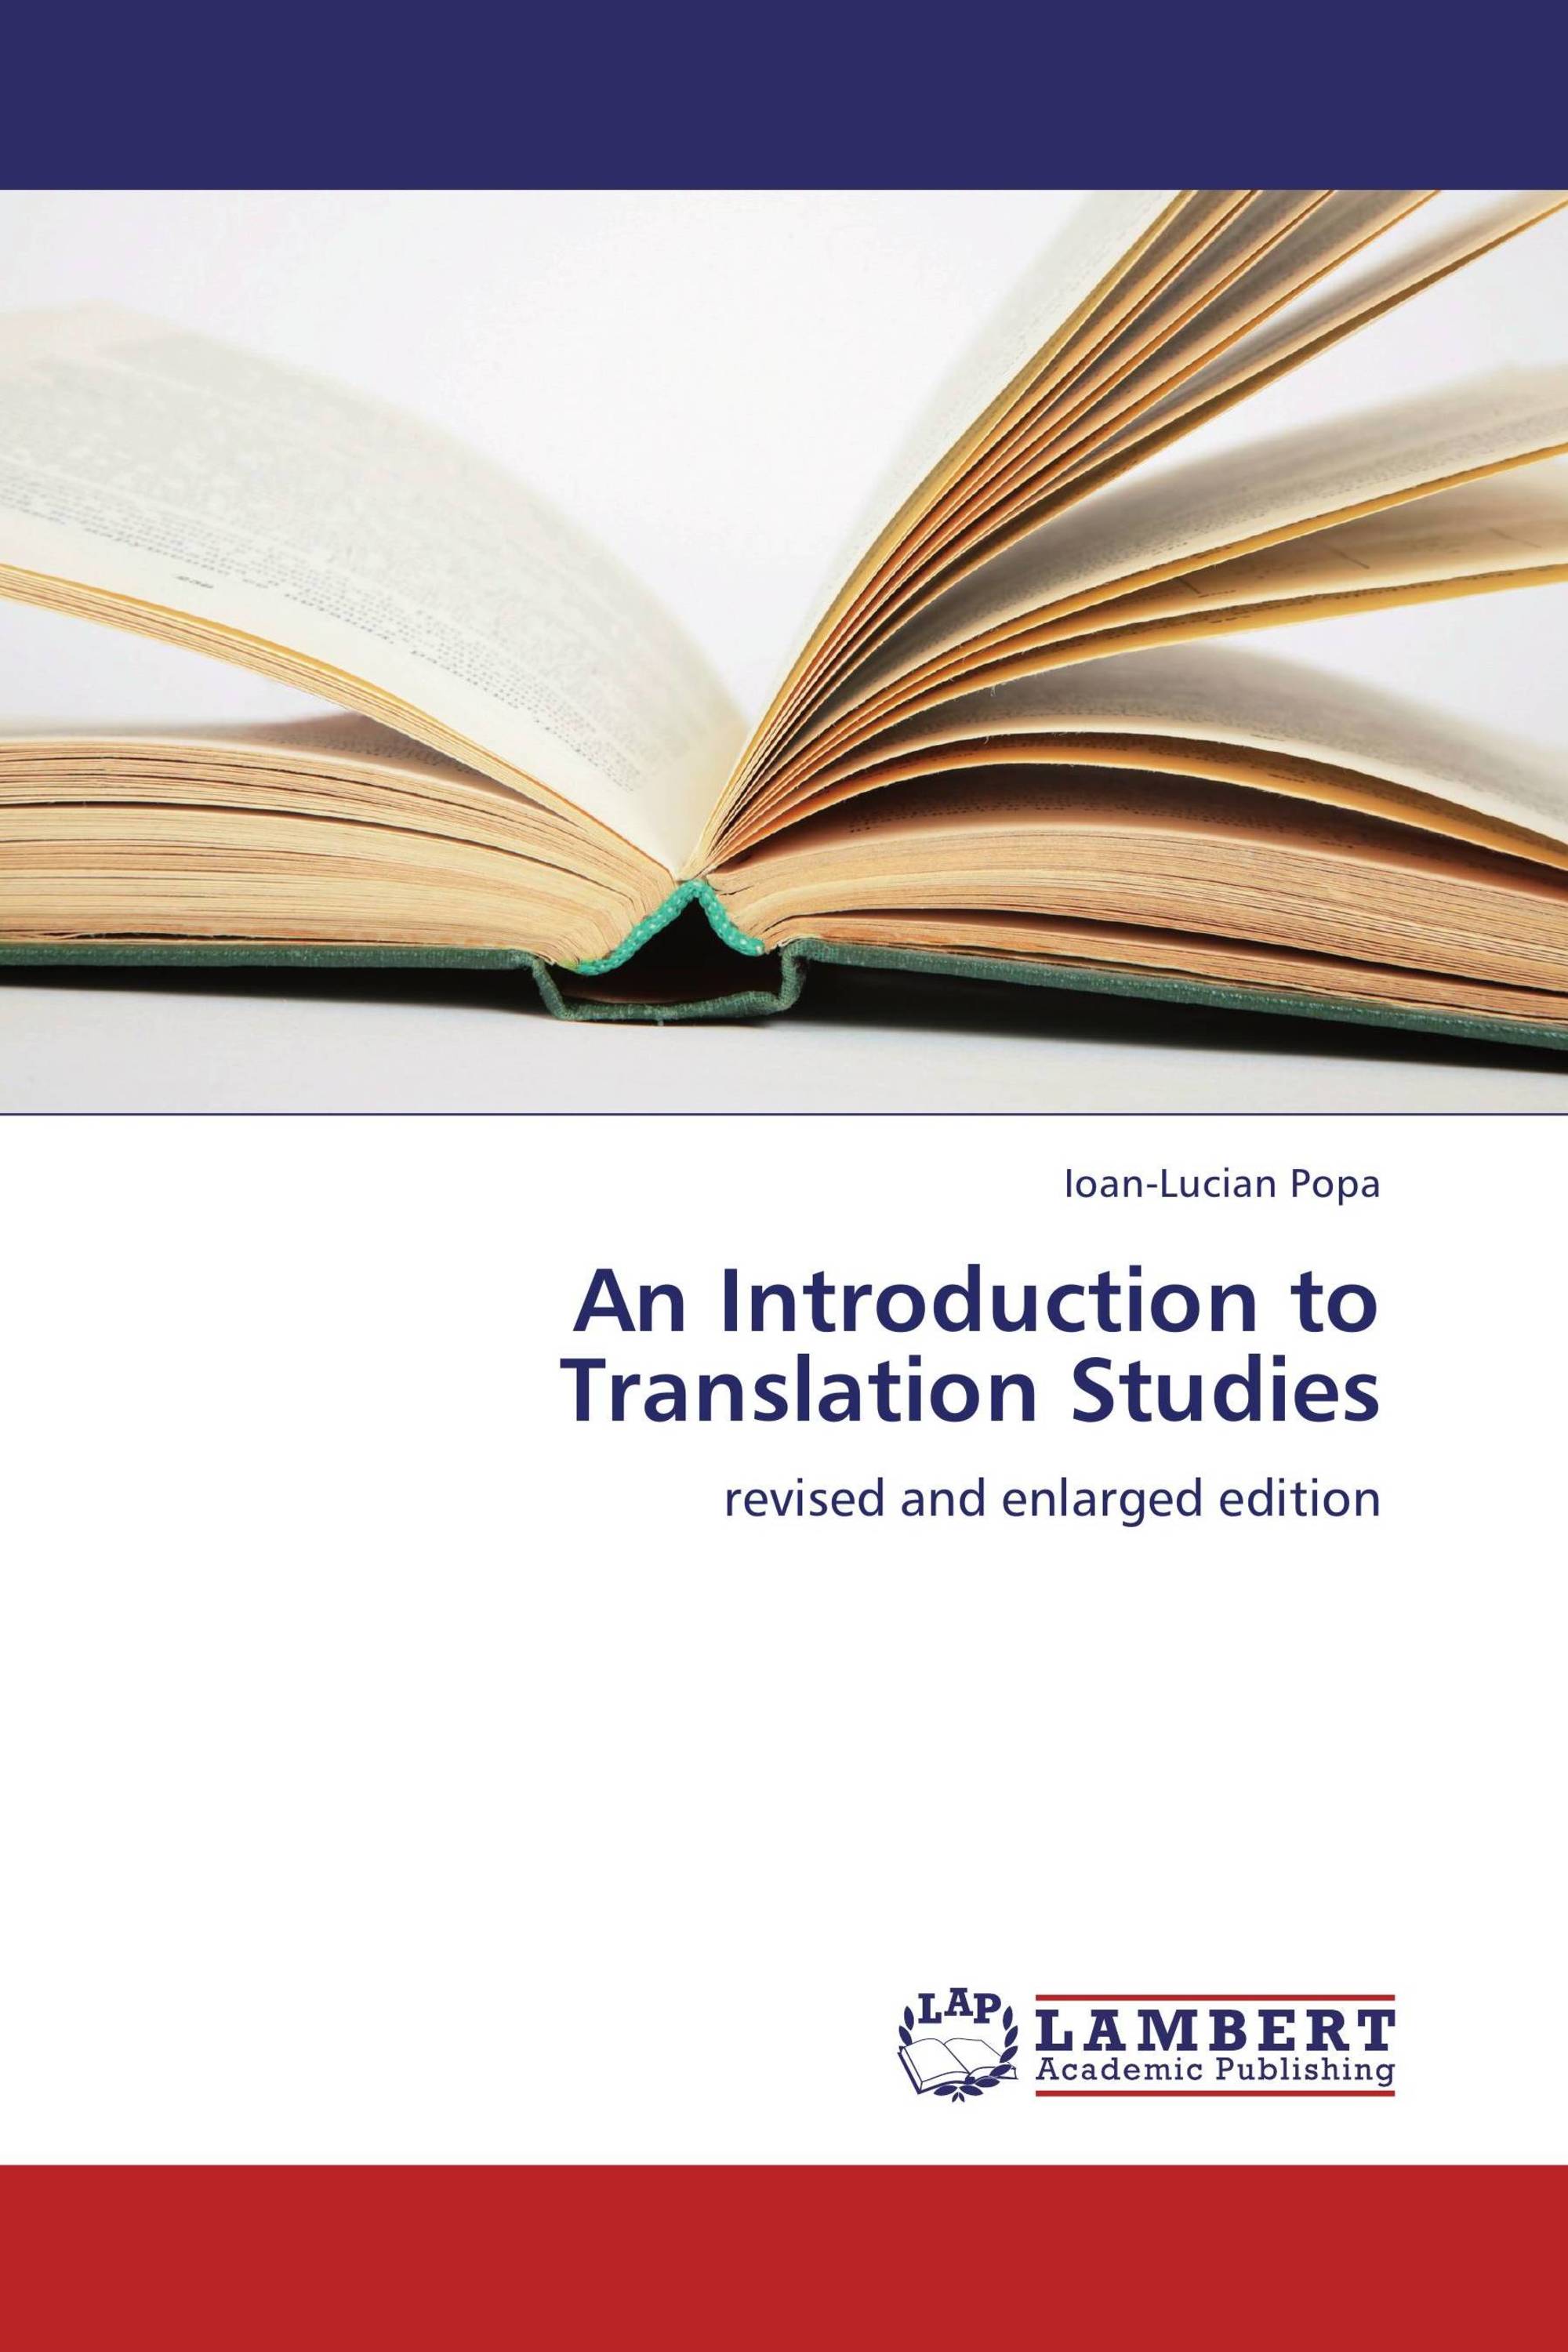 phd in translation studies uk